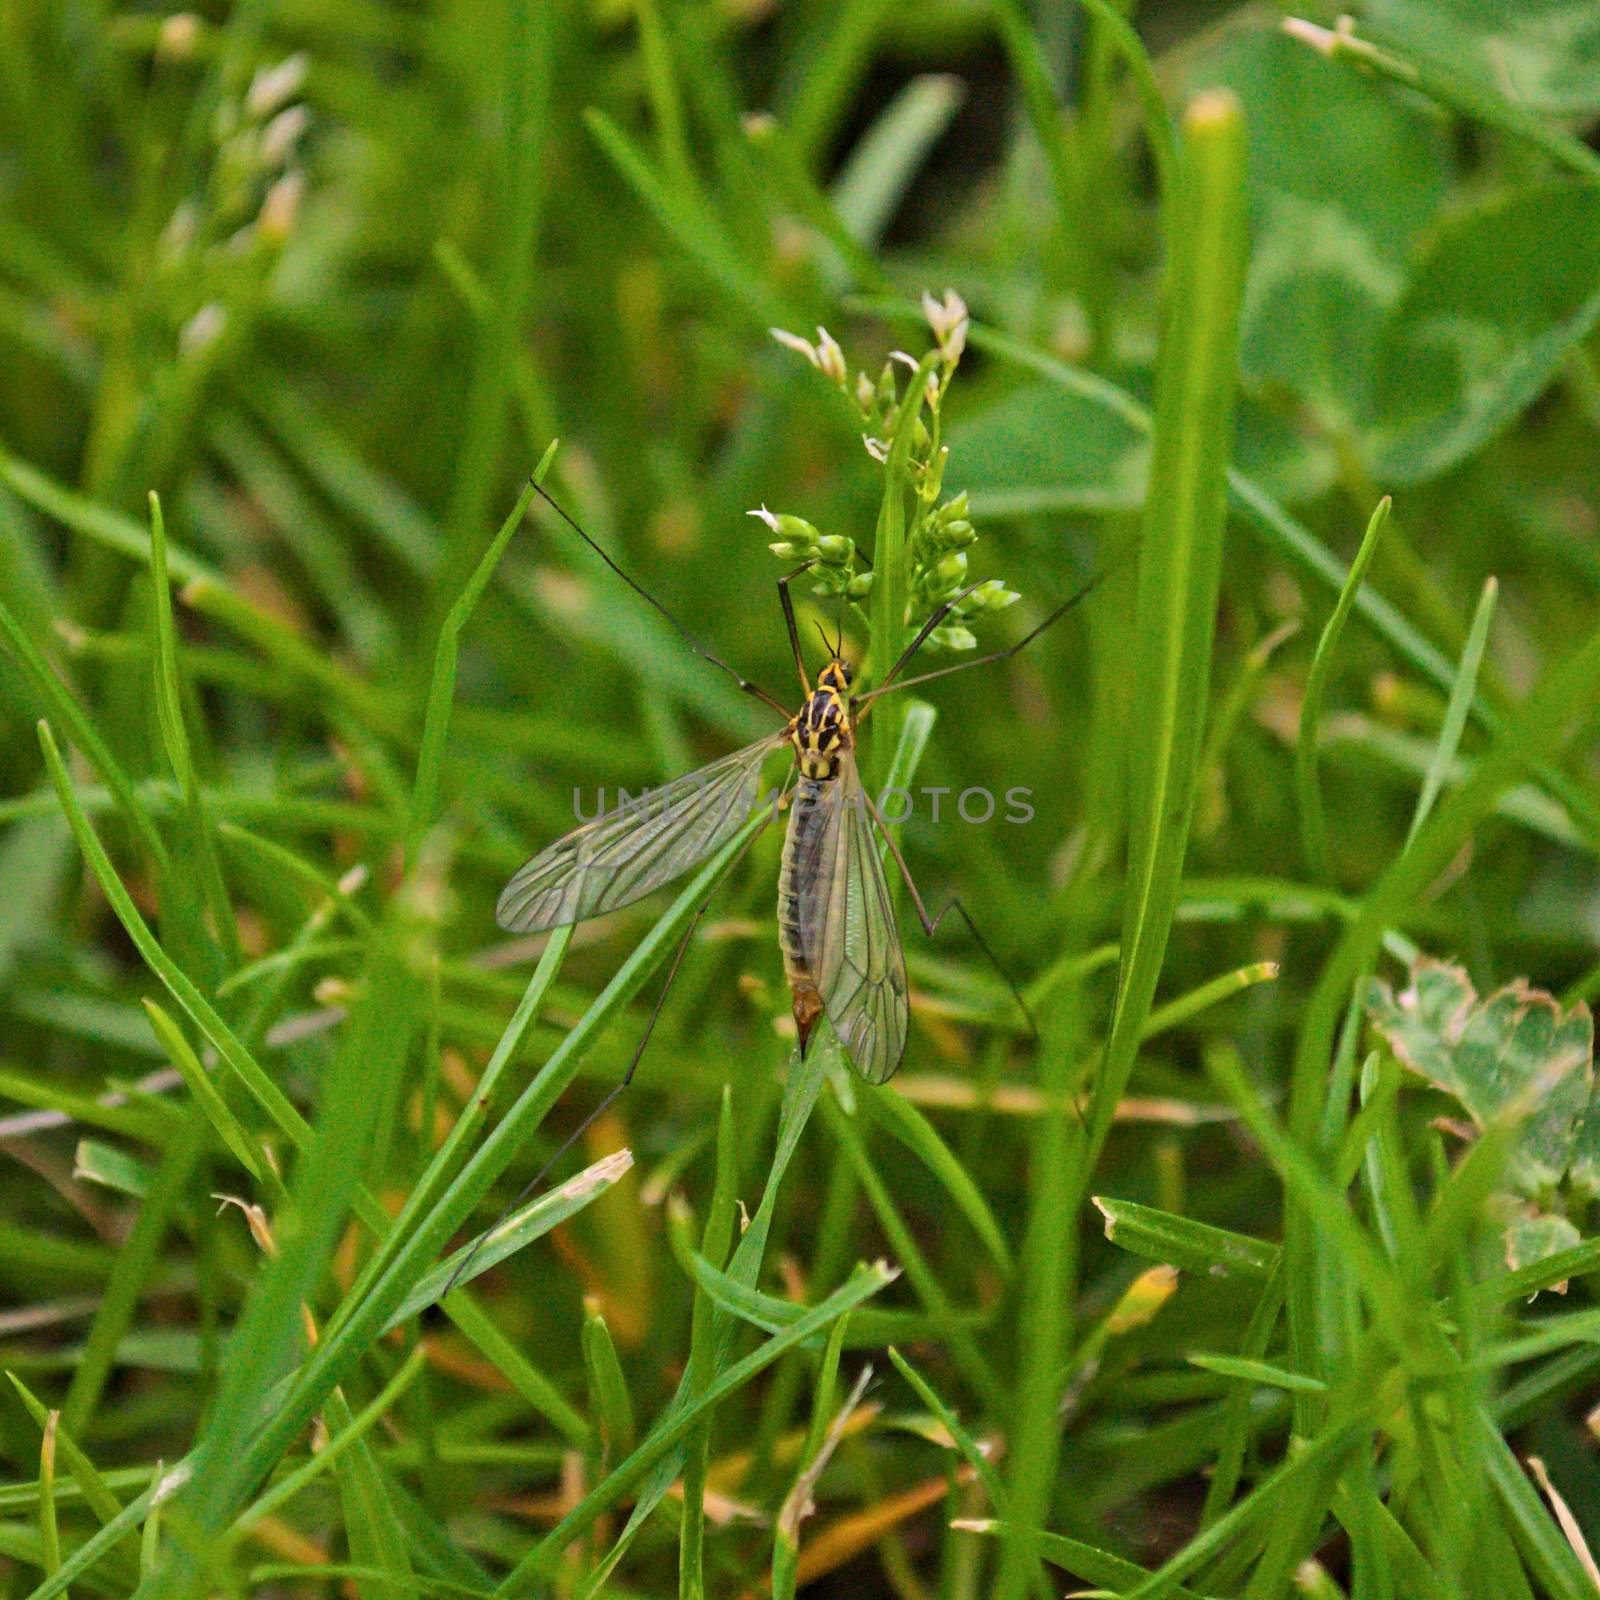 Big mosquito in grass, closeup by sheriffkule